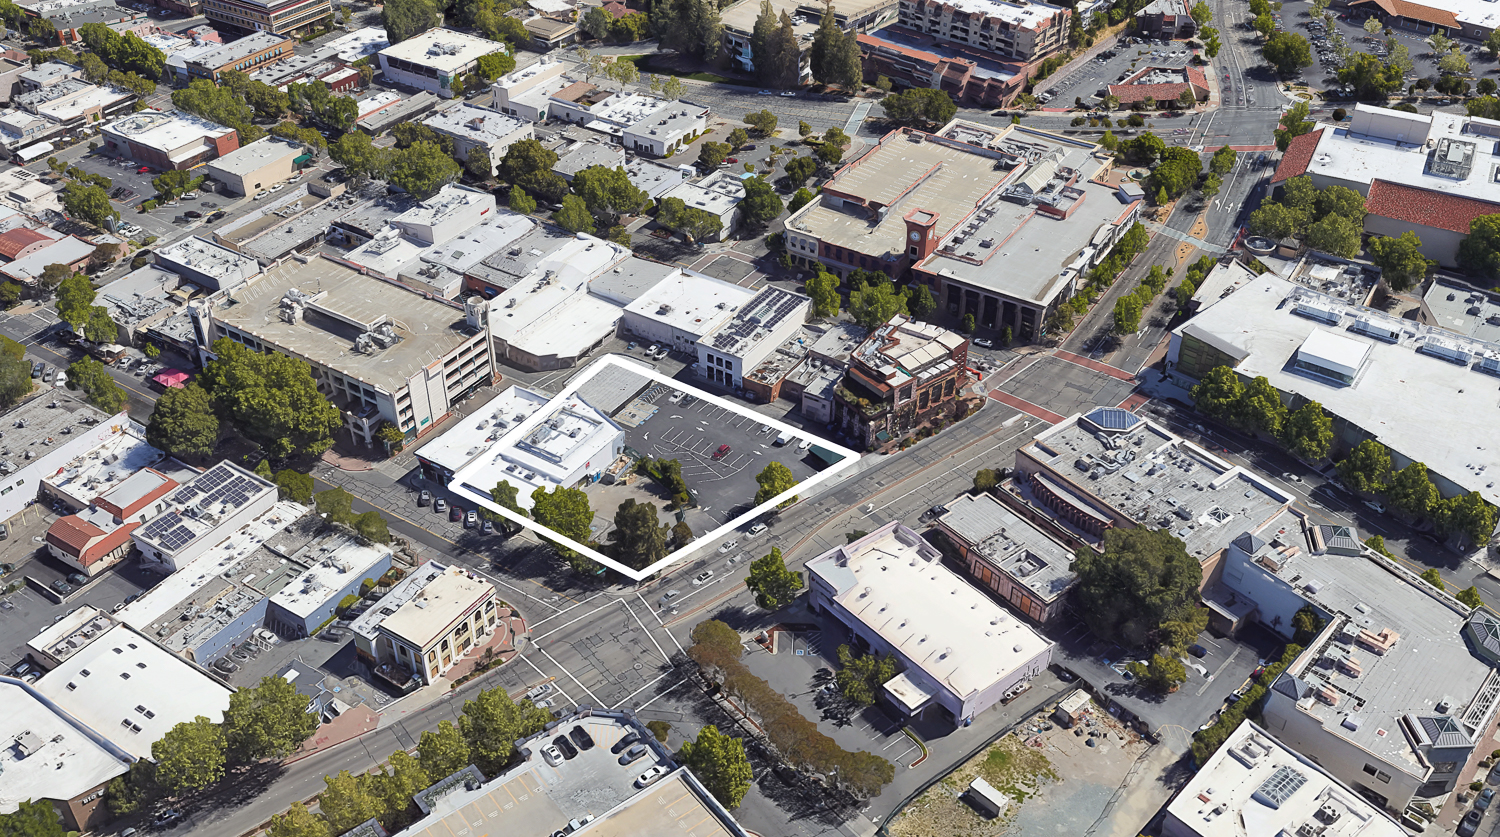 1532-1556 Mount Diablo Boulevard, image via Google Satellite